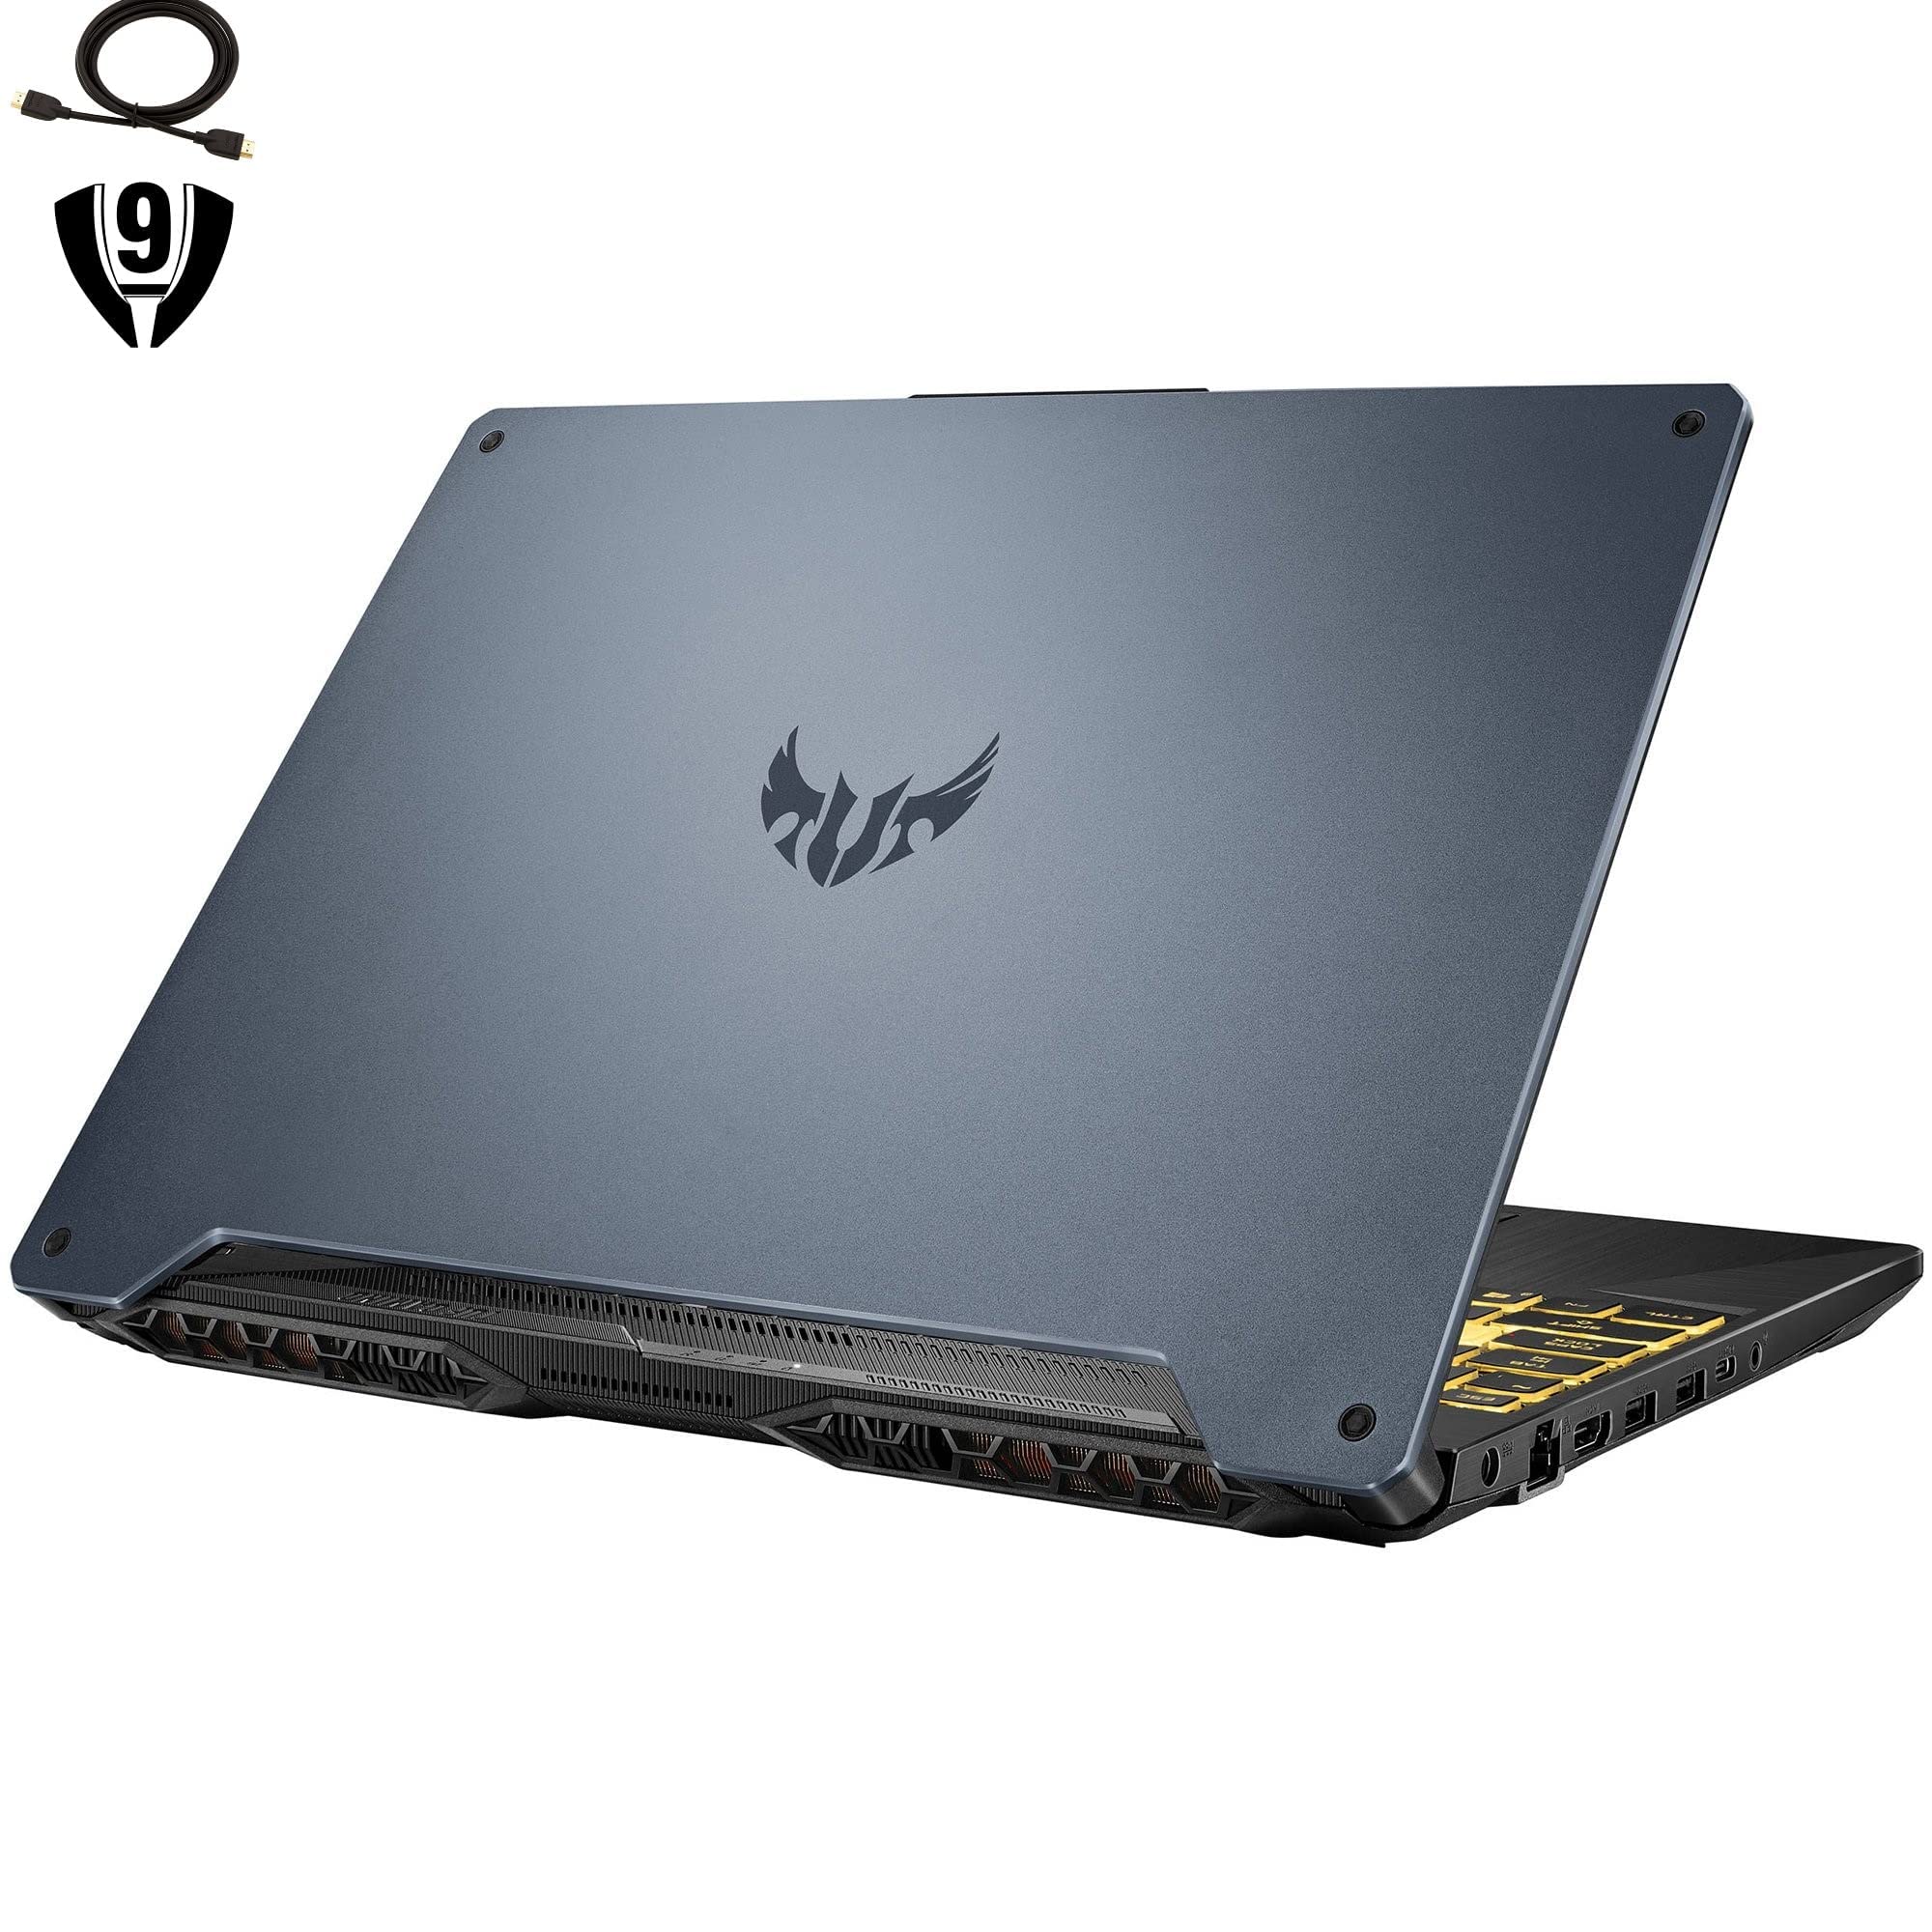 ASUS TUF F15 144Hz Gaming Laptop, 15.6" FHD, Intel Core i5-10300H, 32GB RAM, 1TB SSD+1TB HDD, NVIDIA GeForce GTX 1650, RGB Backlit Keyboard,Windows 10 Home